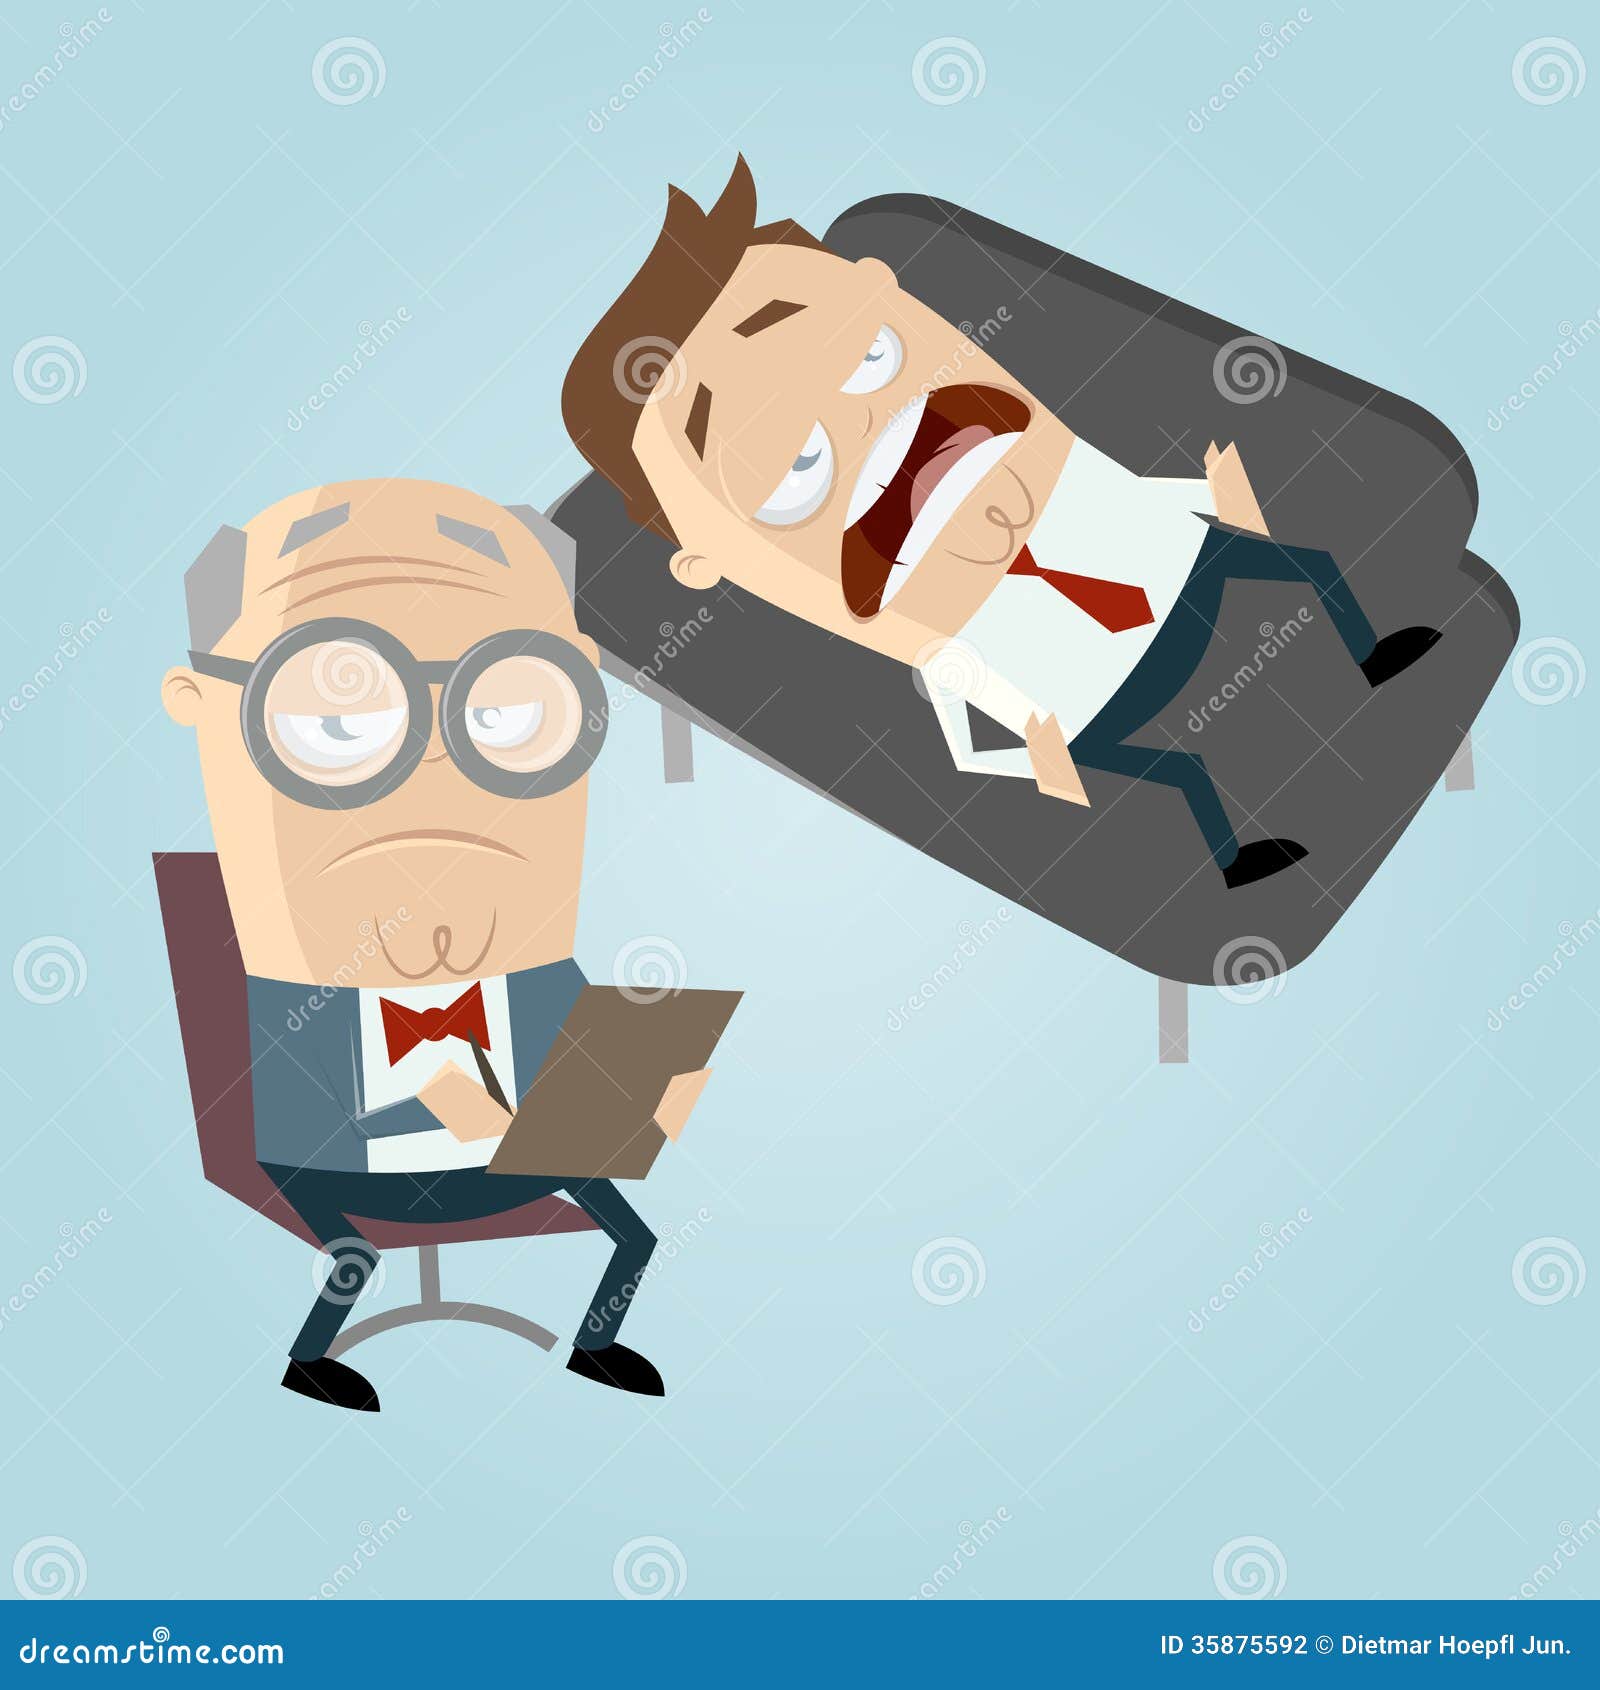 funny-cartoon-psychiatrist-patient-couch-illustration-35875592.jpg